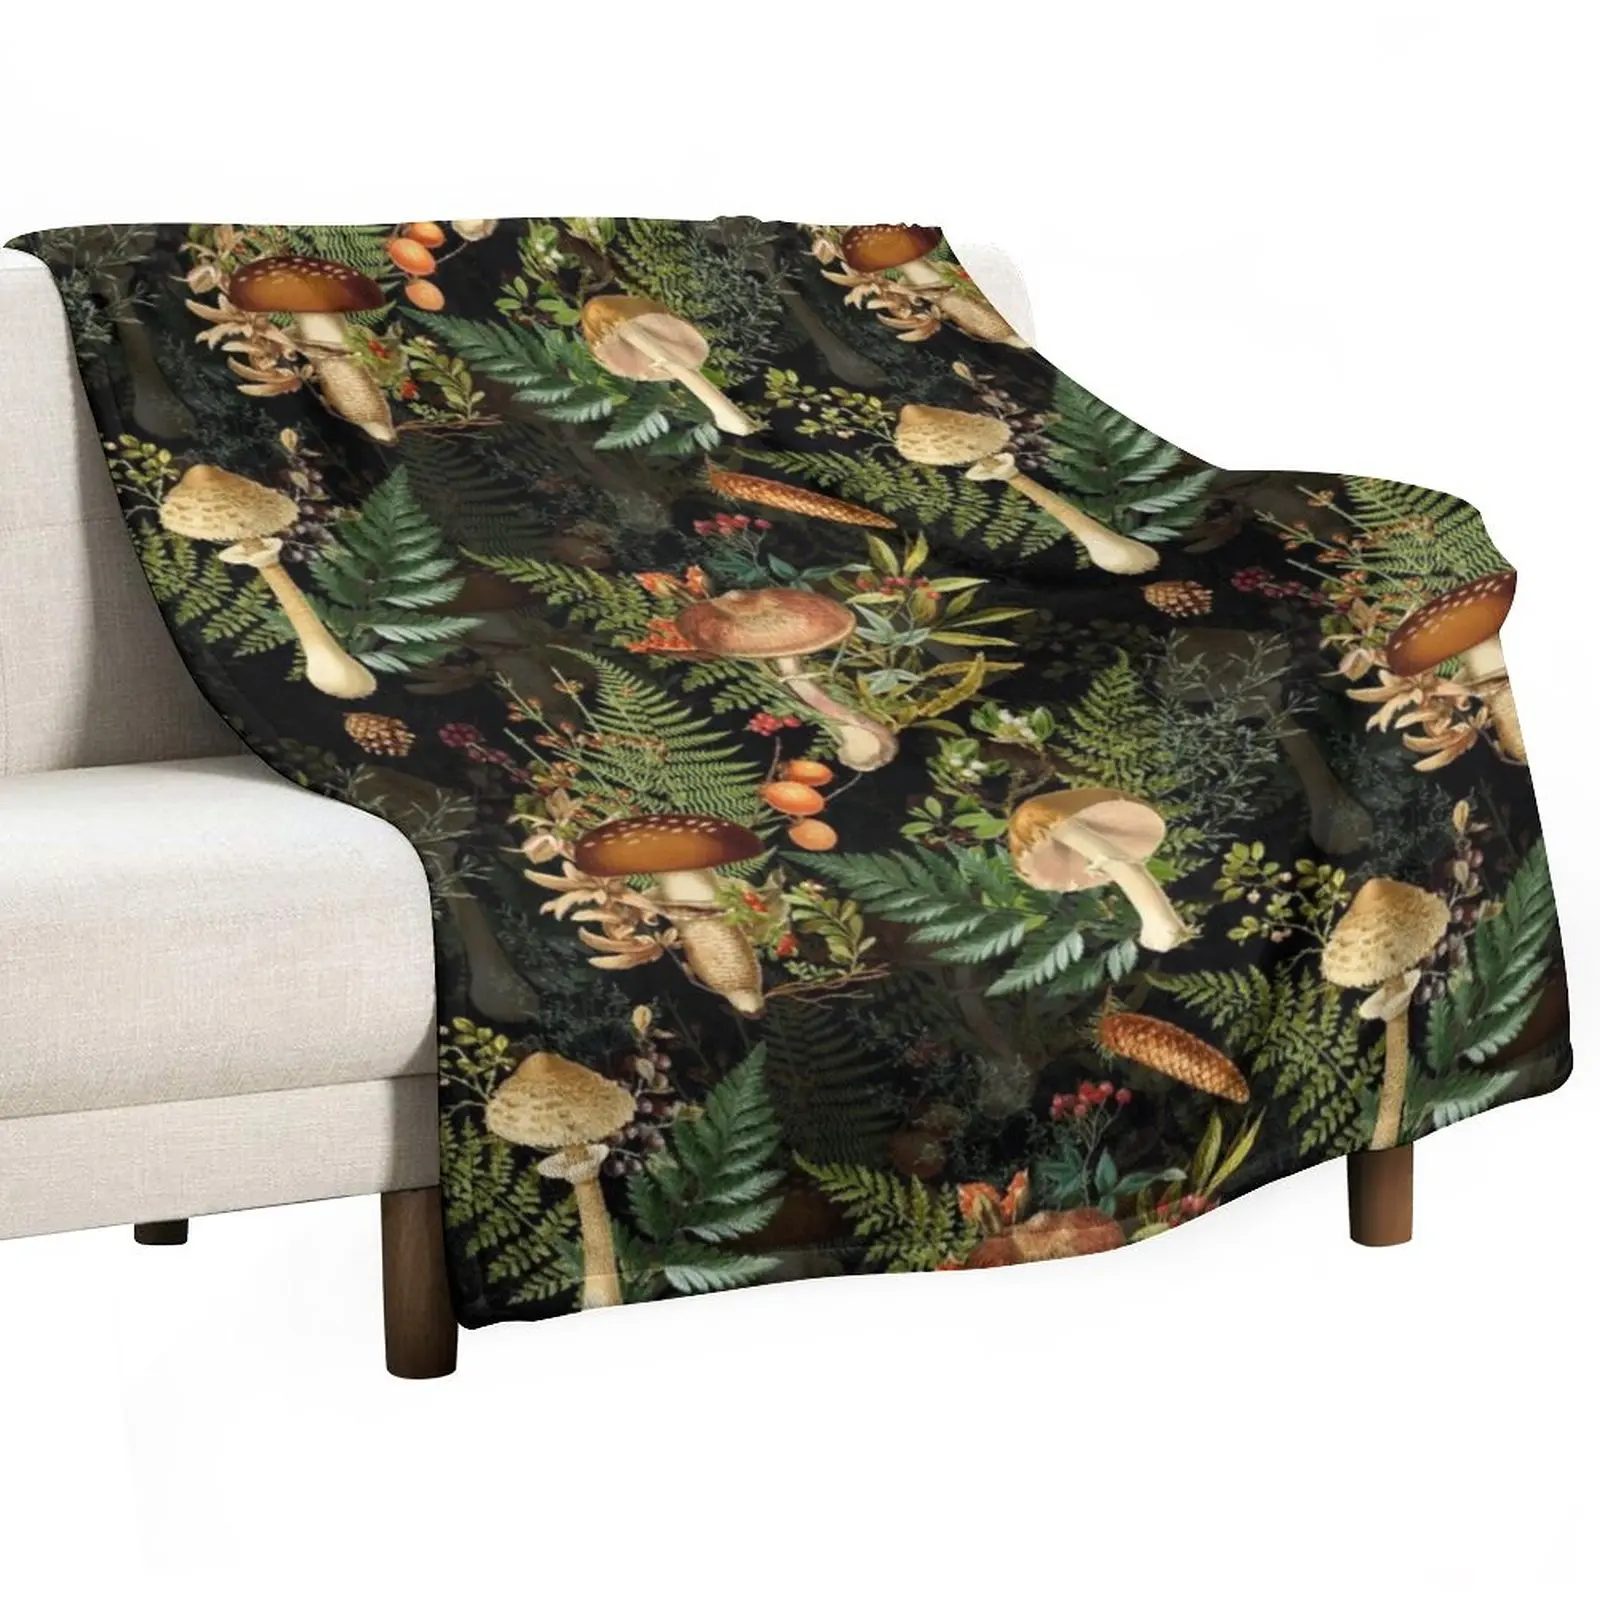 

Vintage toxic mushrooms forest pattern on black Throw Blanket Blanket For Decorative Sofa Softest Blanket